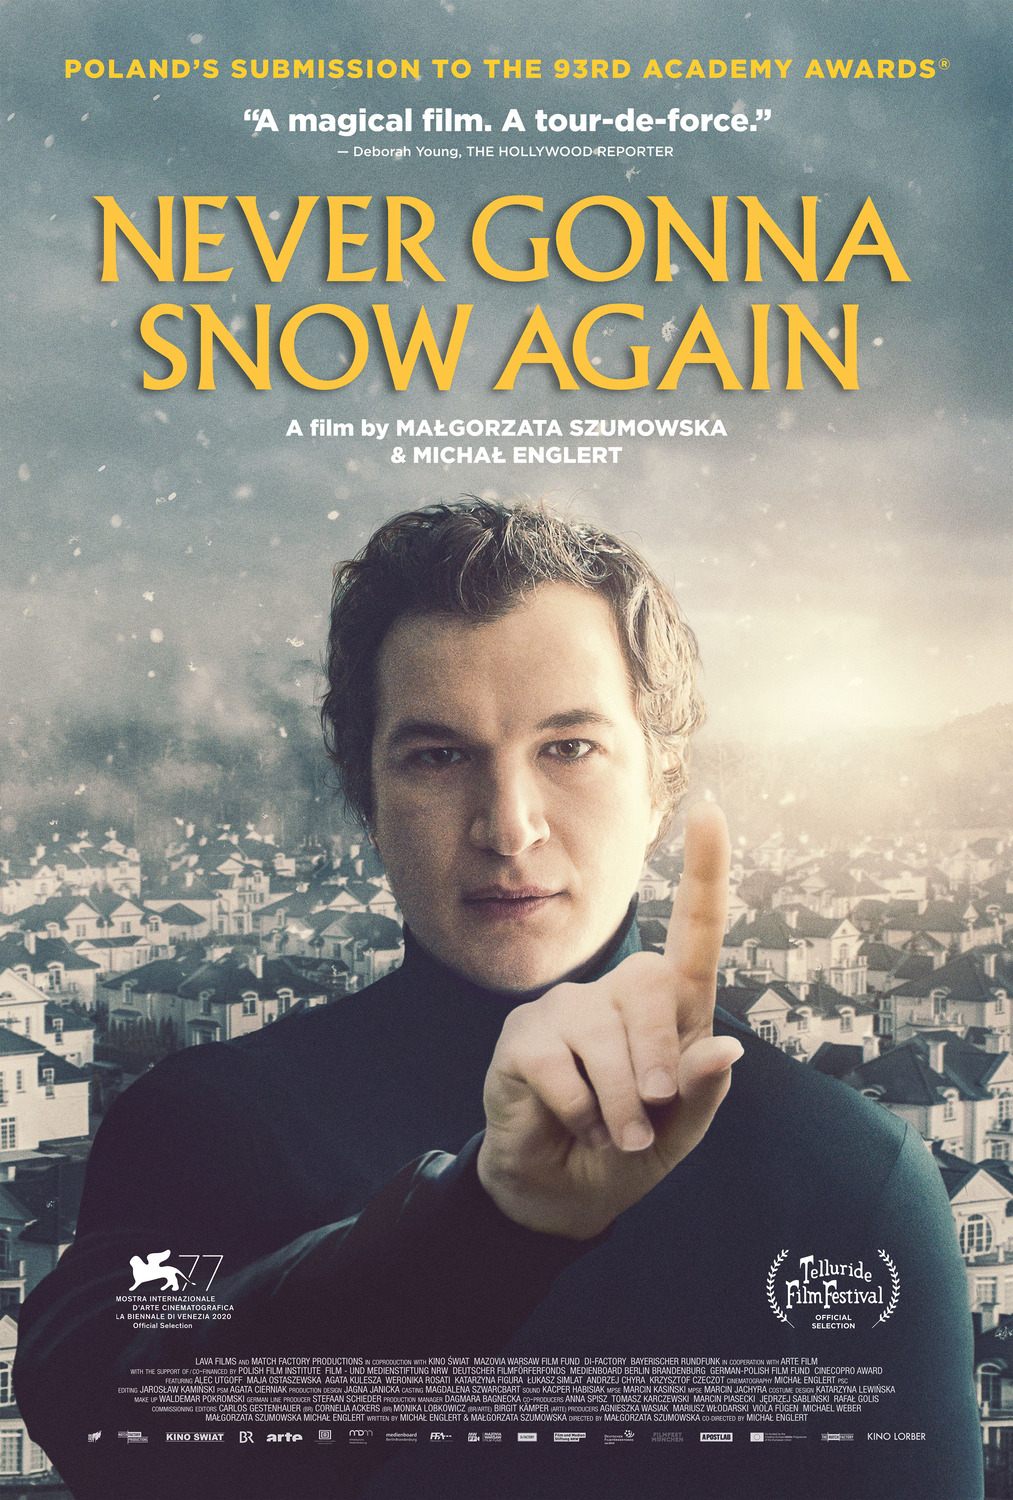 Extra Large Movie Poster Image for Sniegu juz nigdy nie bedzie 